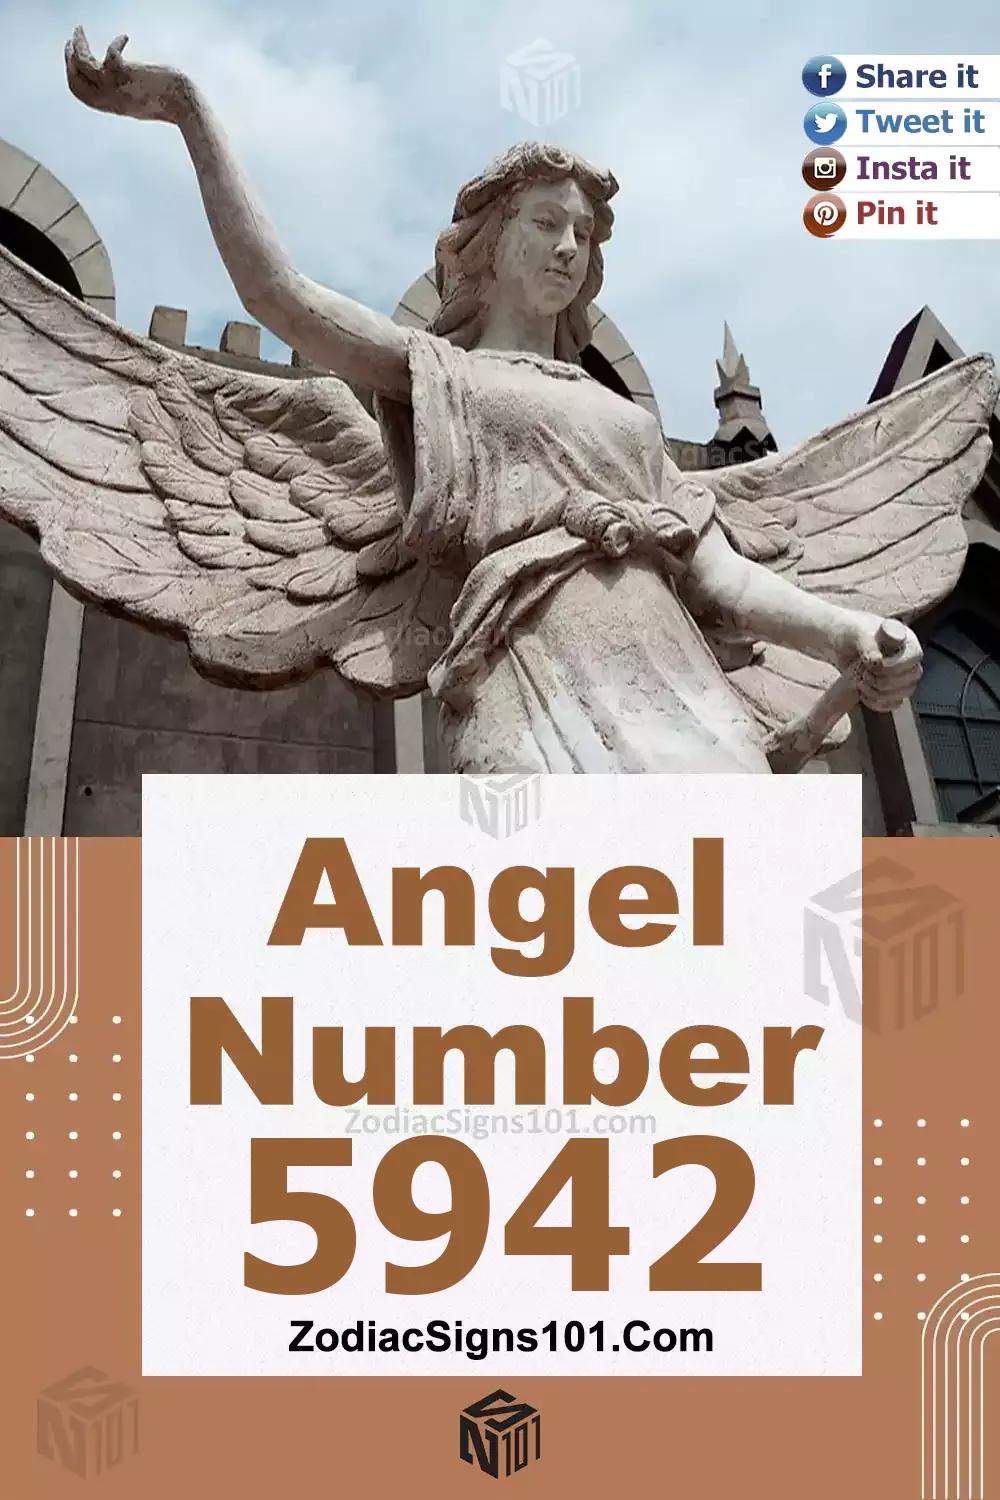 5942-Angel-Number-Meaning.jpg